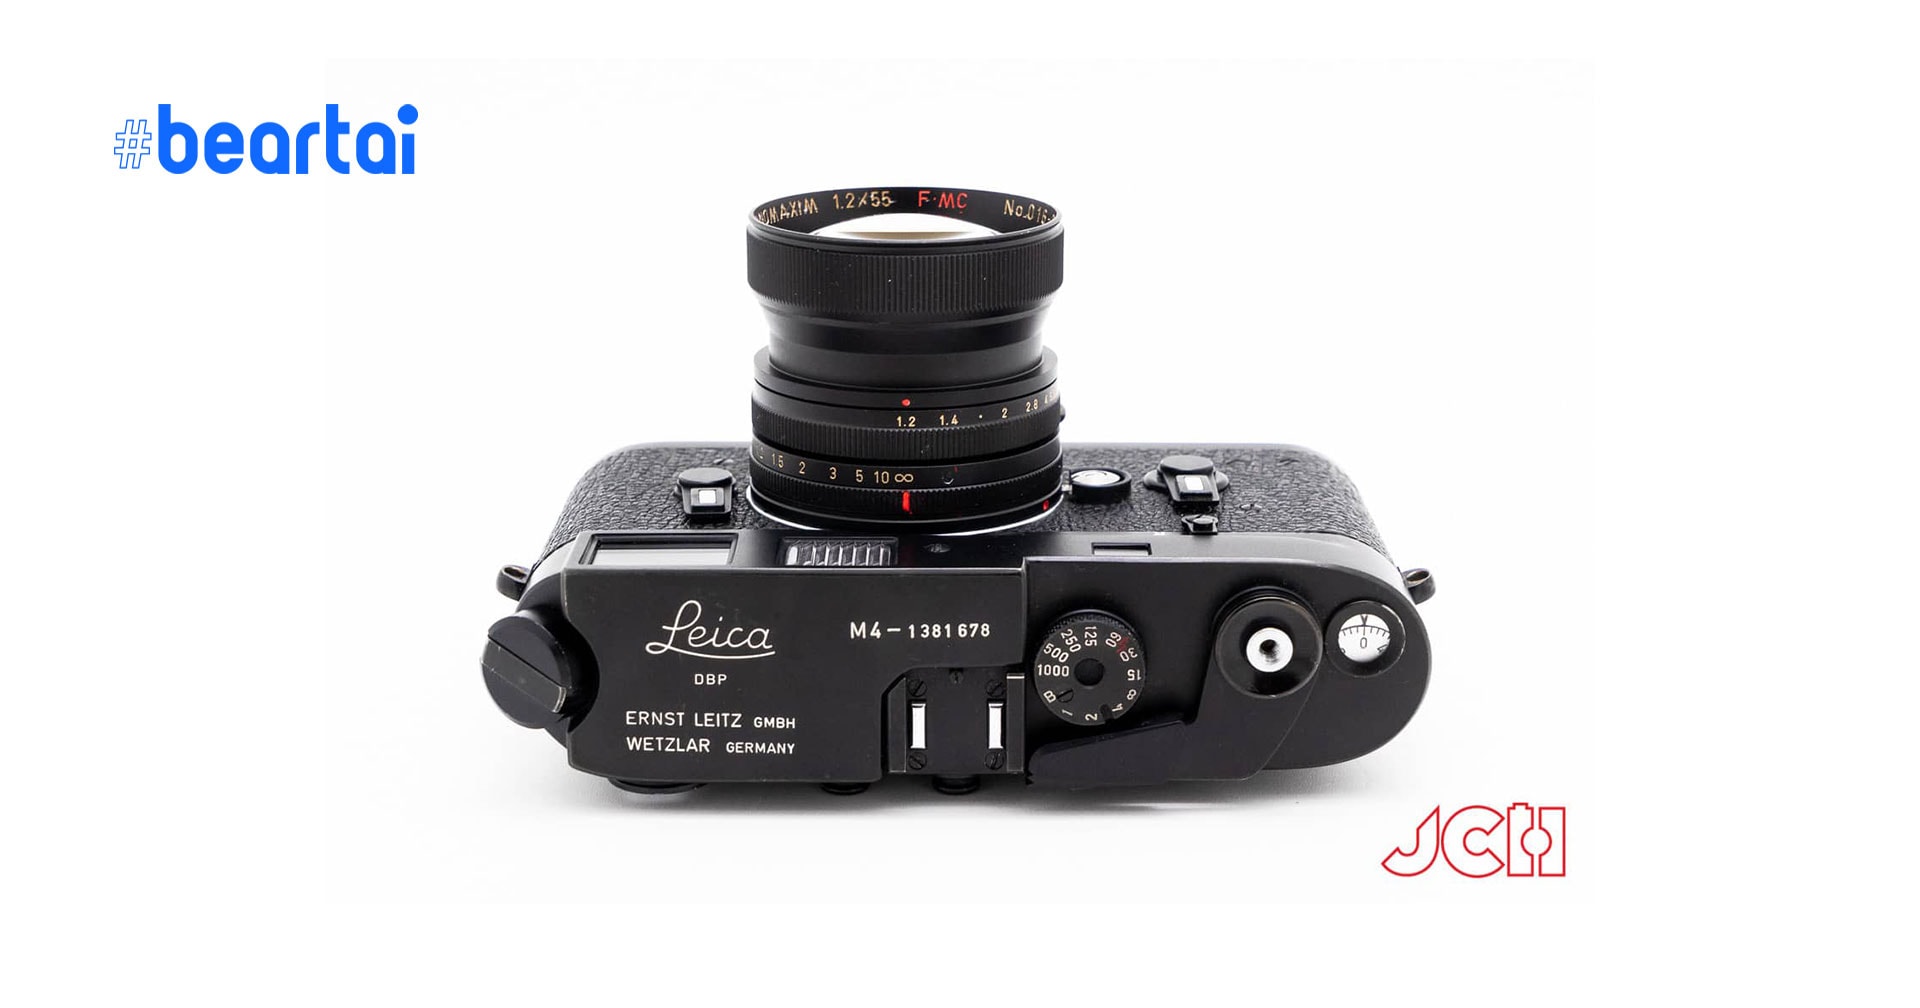 MS Optics เปิดตัวเลนส์ใหม่ Elnomaxim 55mm F/1.2 สำหรับกล้อง Leica M-mount